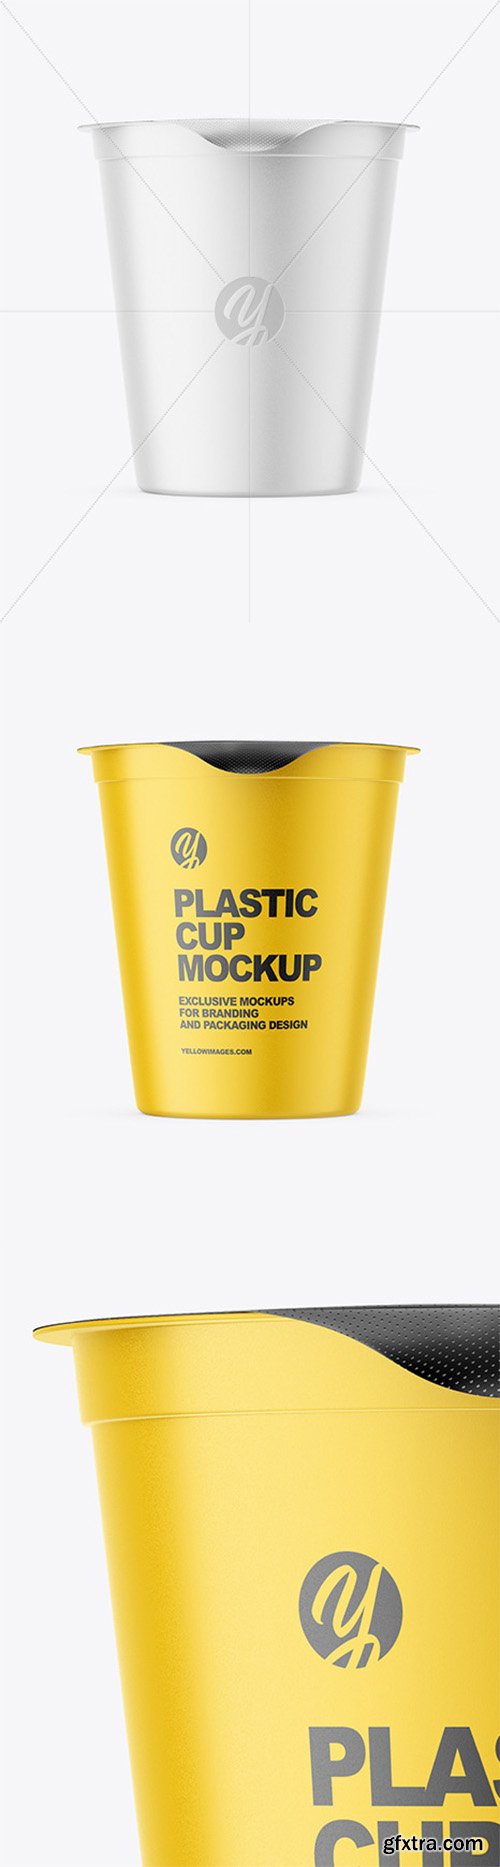 40 Mockup Plastic Box Potoshop